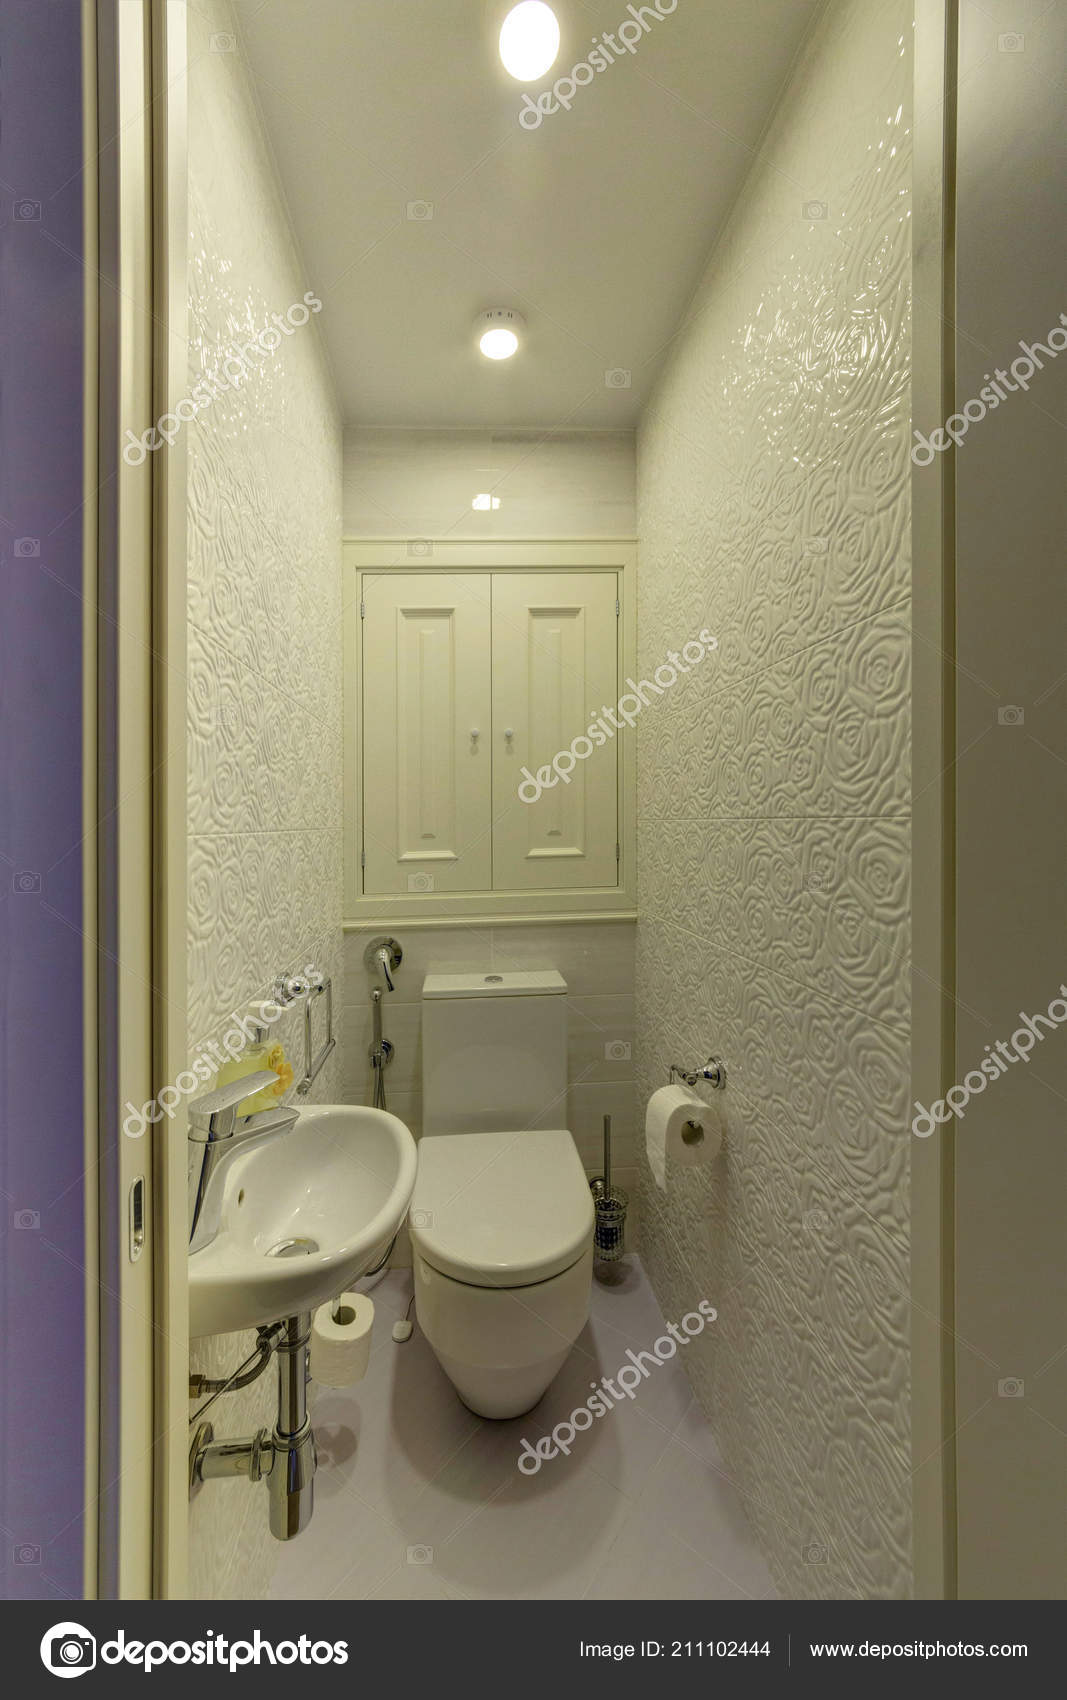 Light Toilet Small Sink Stock Photo C Twins03 211102444